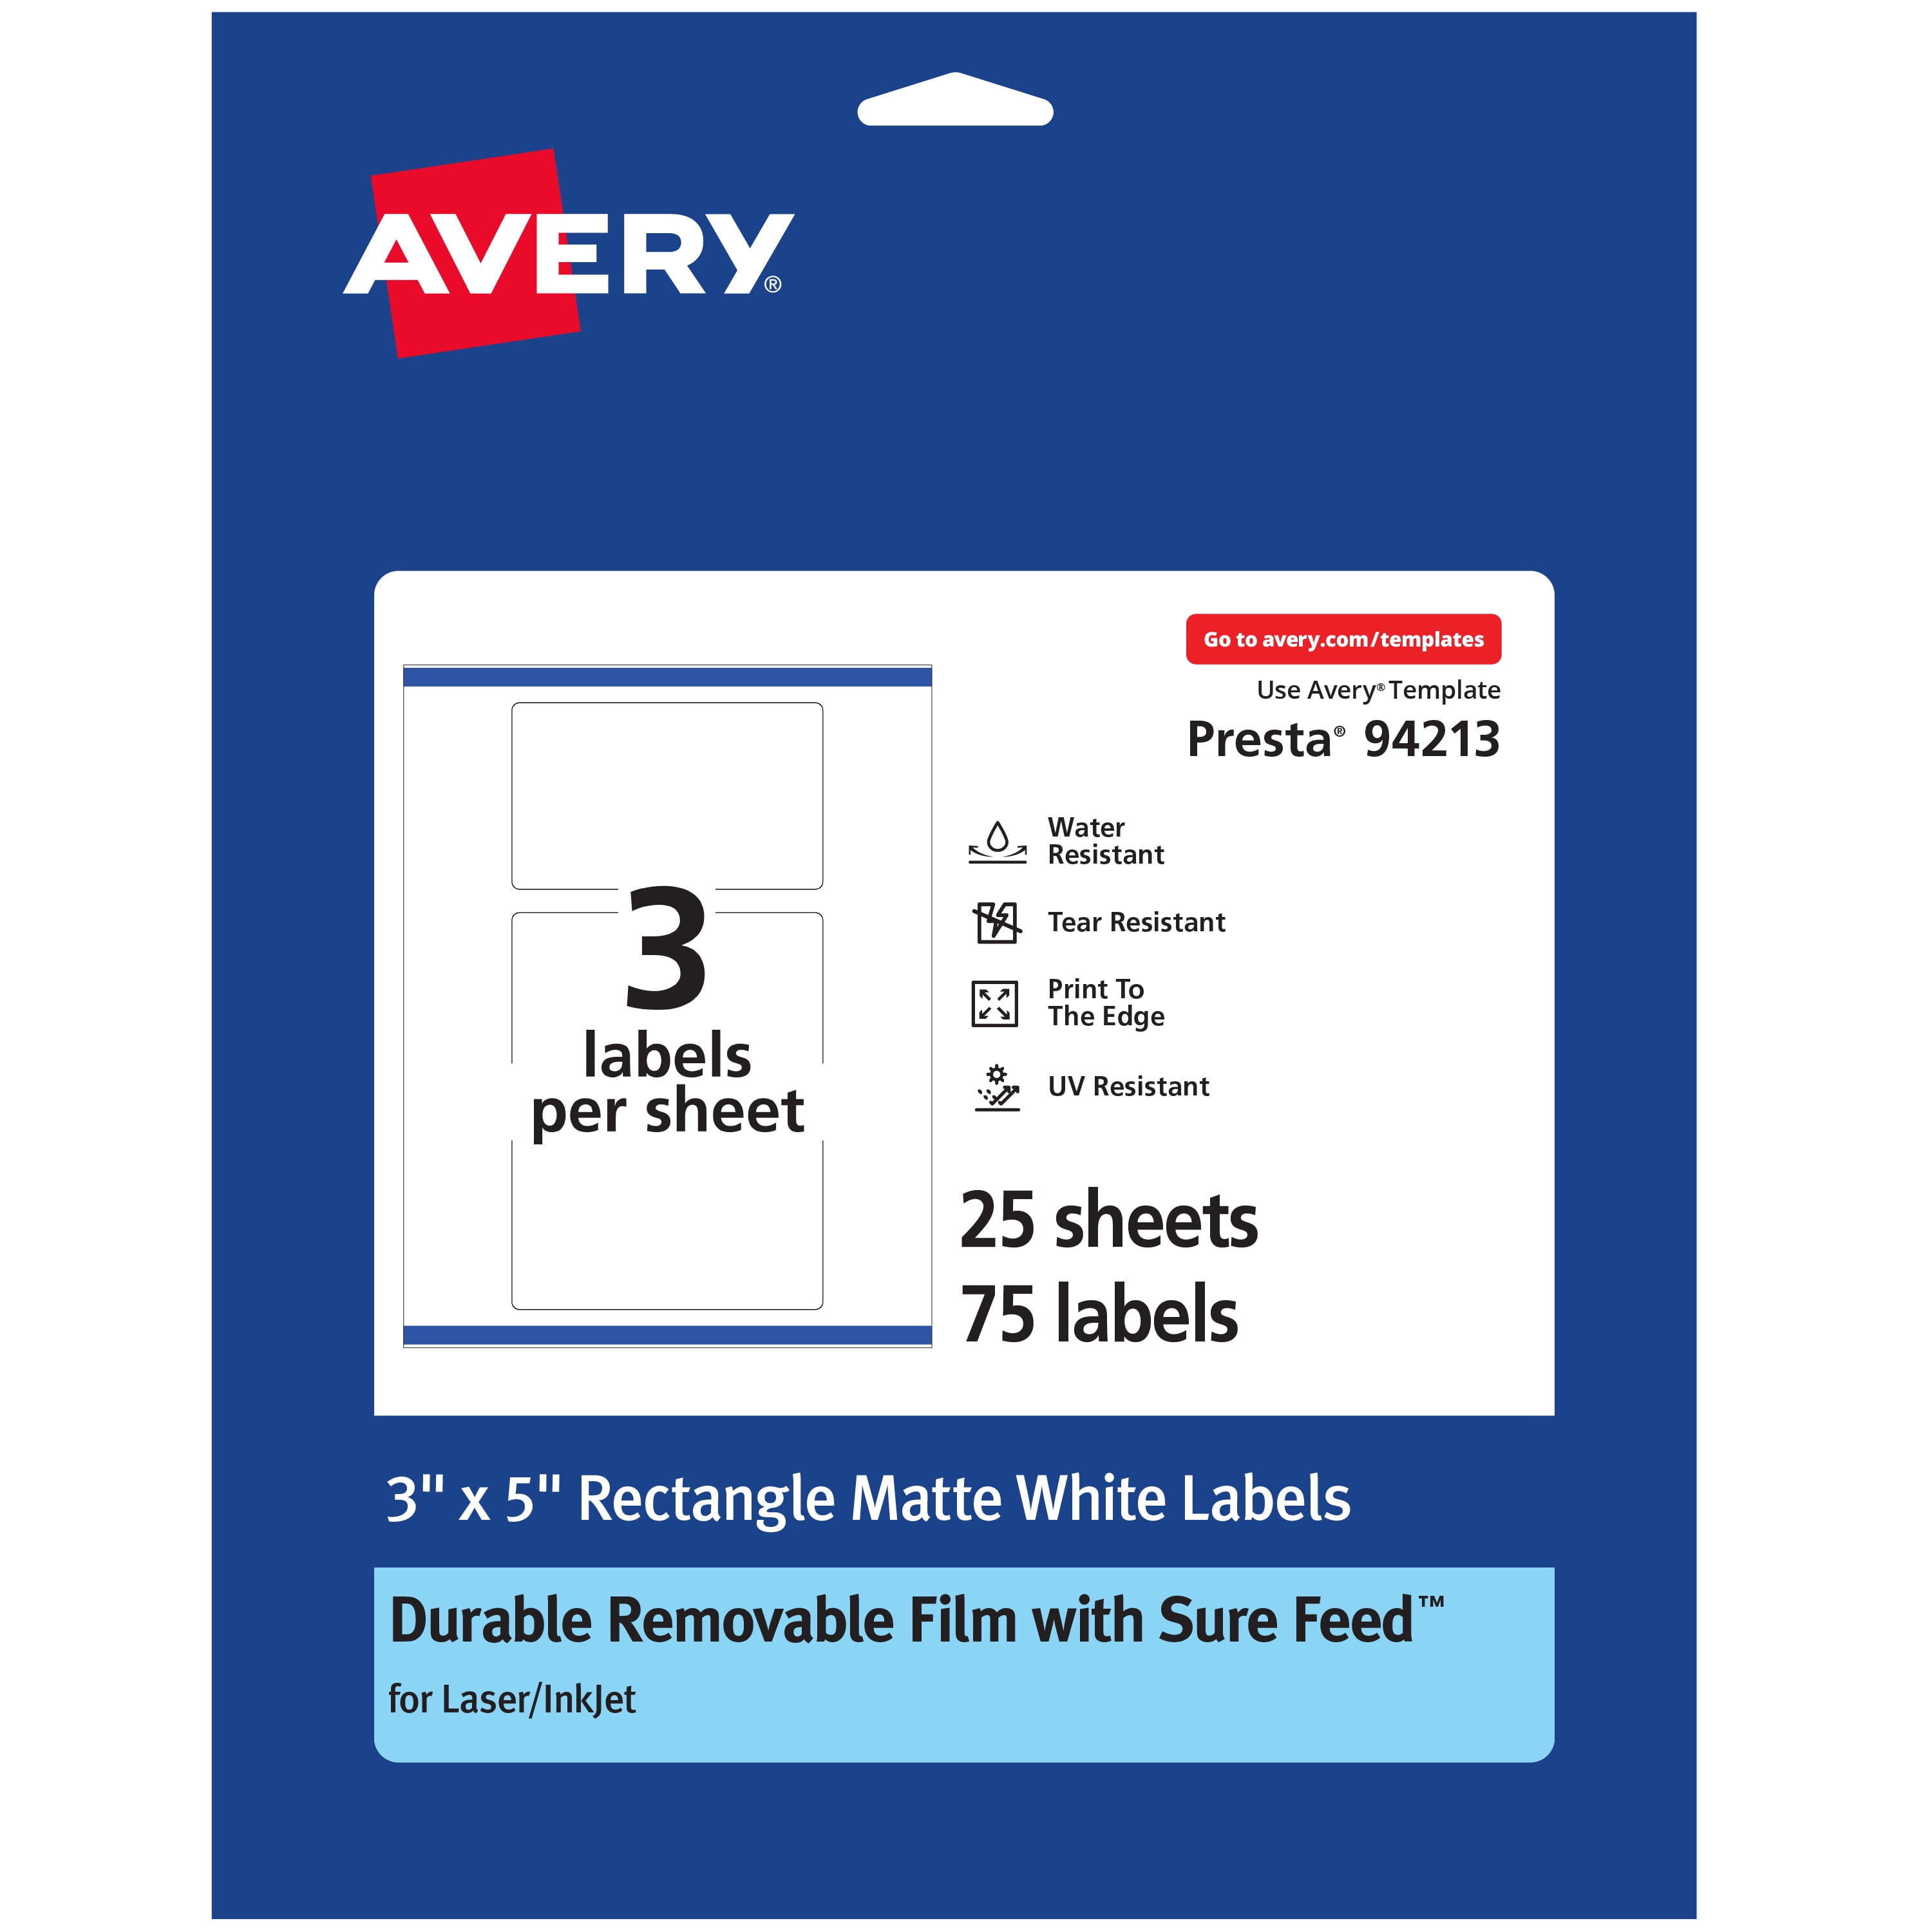 Online Labels - Removable Sticker Paper - White Matte - 100 Sheets - 8.5 x  11 Full Sheet Label - Inkjet/Laser Printer 